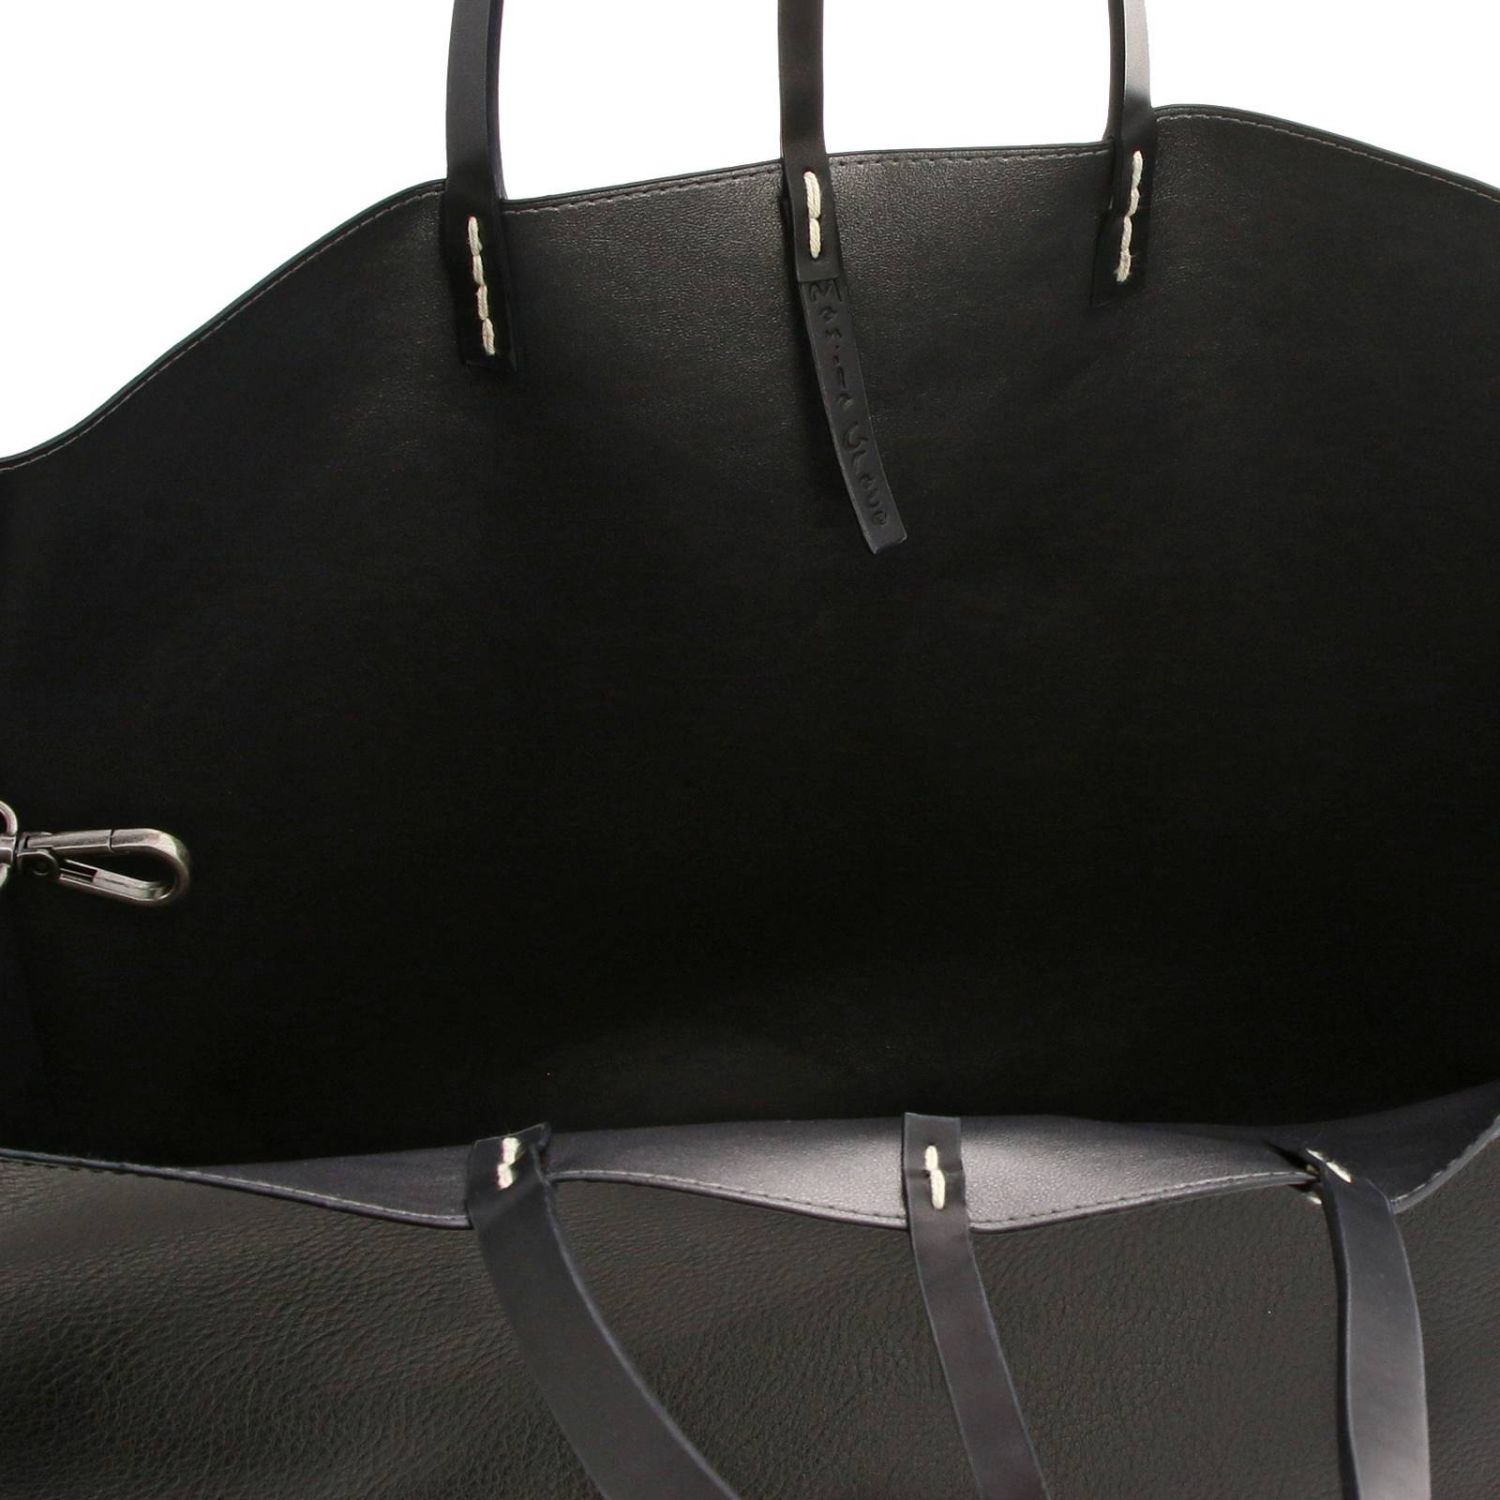 Manila Grace Outlet: Crossbody bags women - Black | Crossbody Bags ...